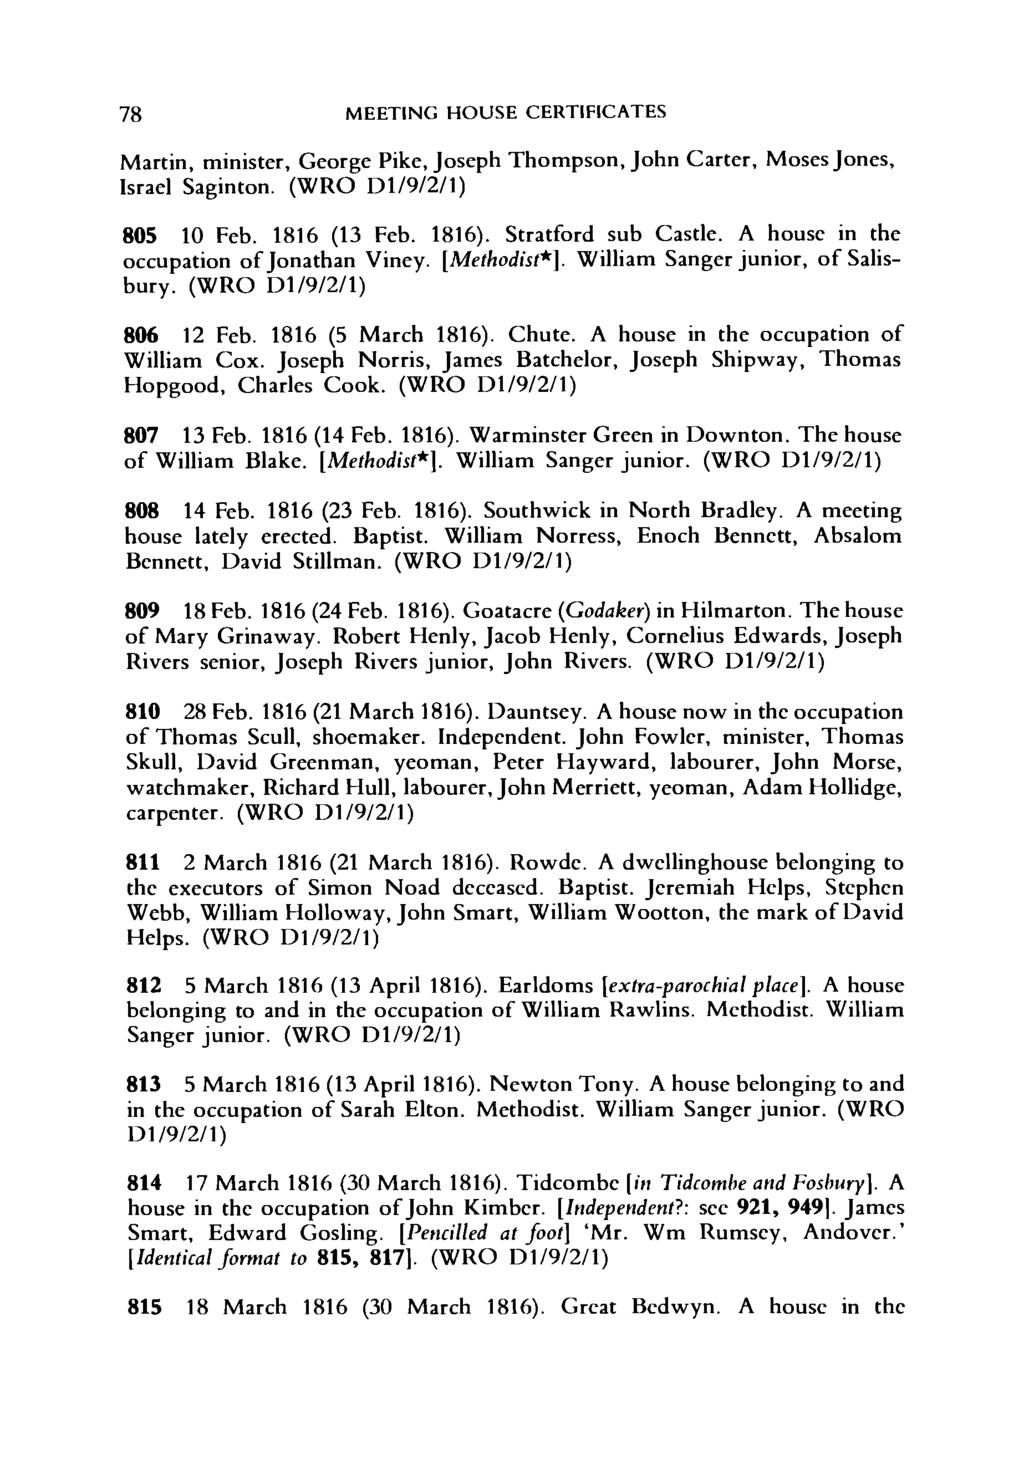 78 MEETING HOUSE CERTIFICATES Martin, minister, George Pike, Joseph Thompson, John Carter, MosesJones, Israel Saginton. (WRO D1/9/2/1) 805 10 Feb. 1816 (13 Feb. 1816). Stratford sub Castle.